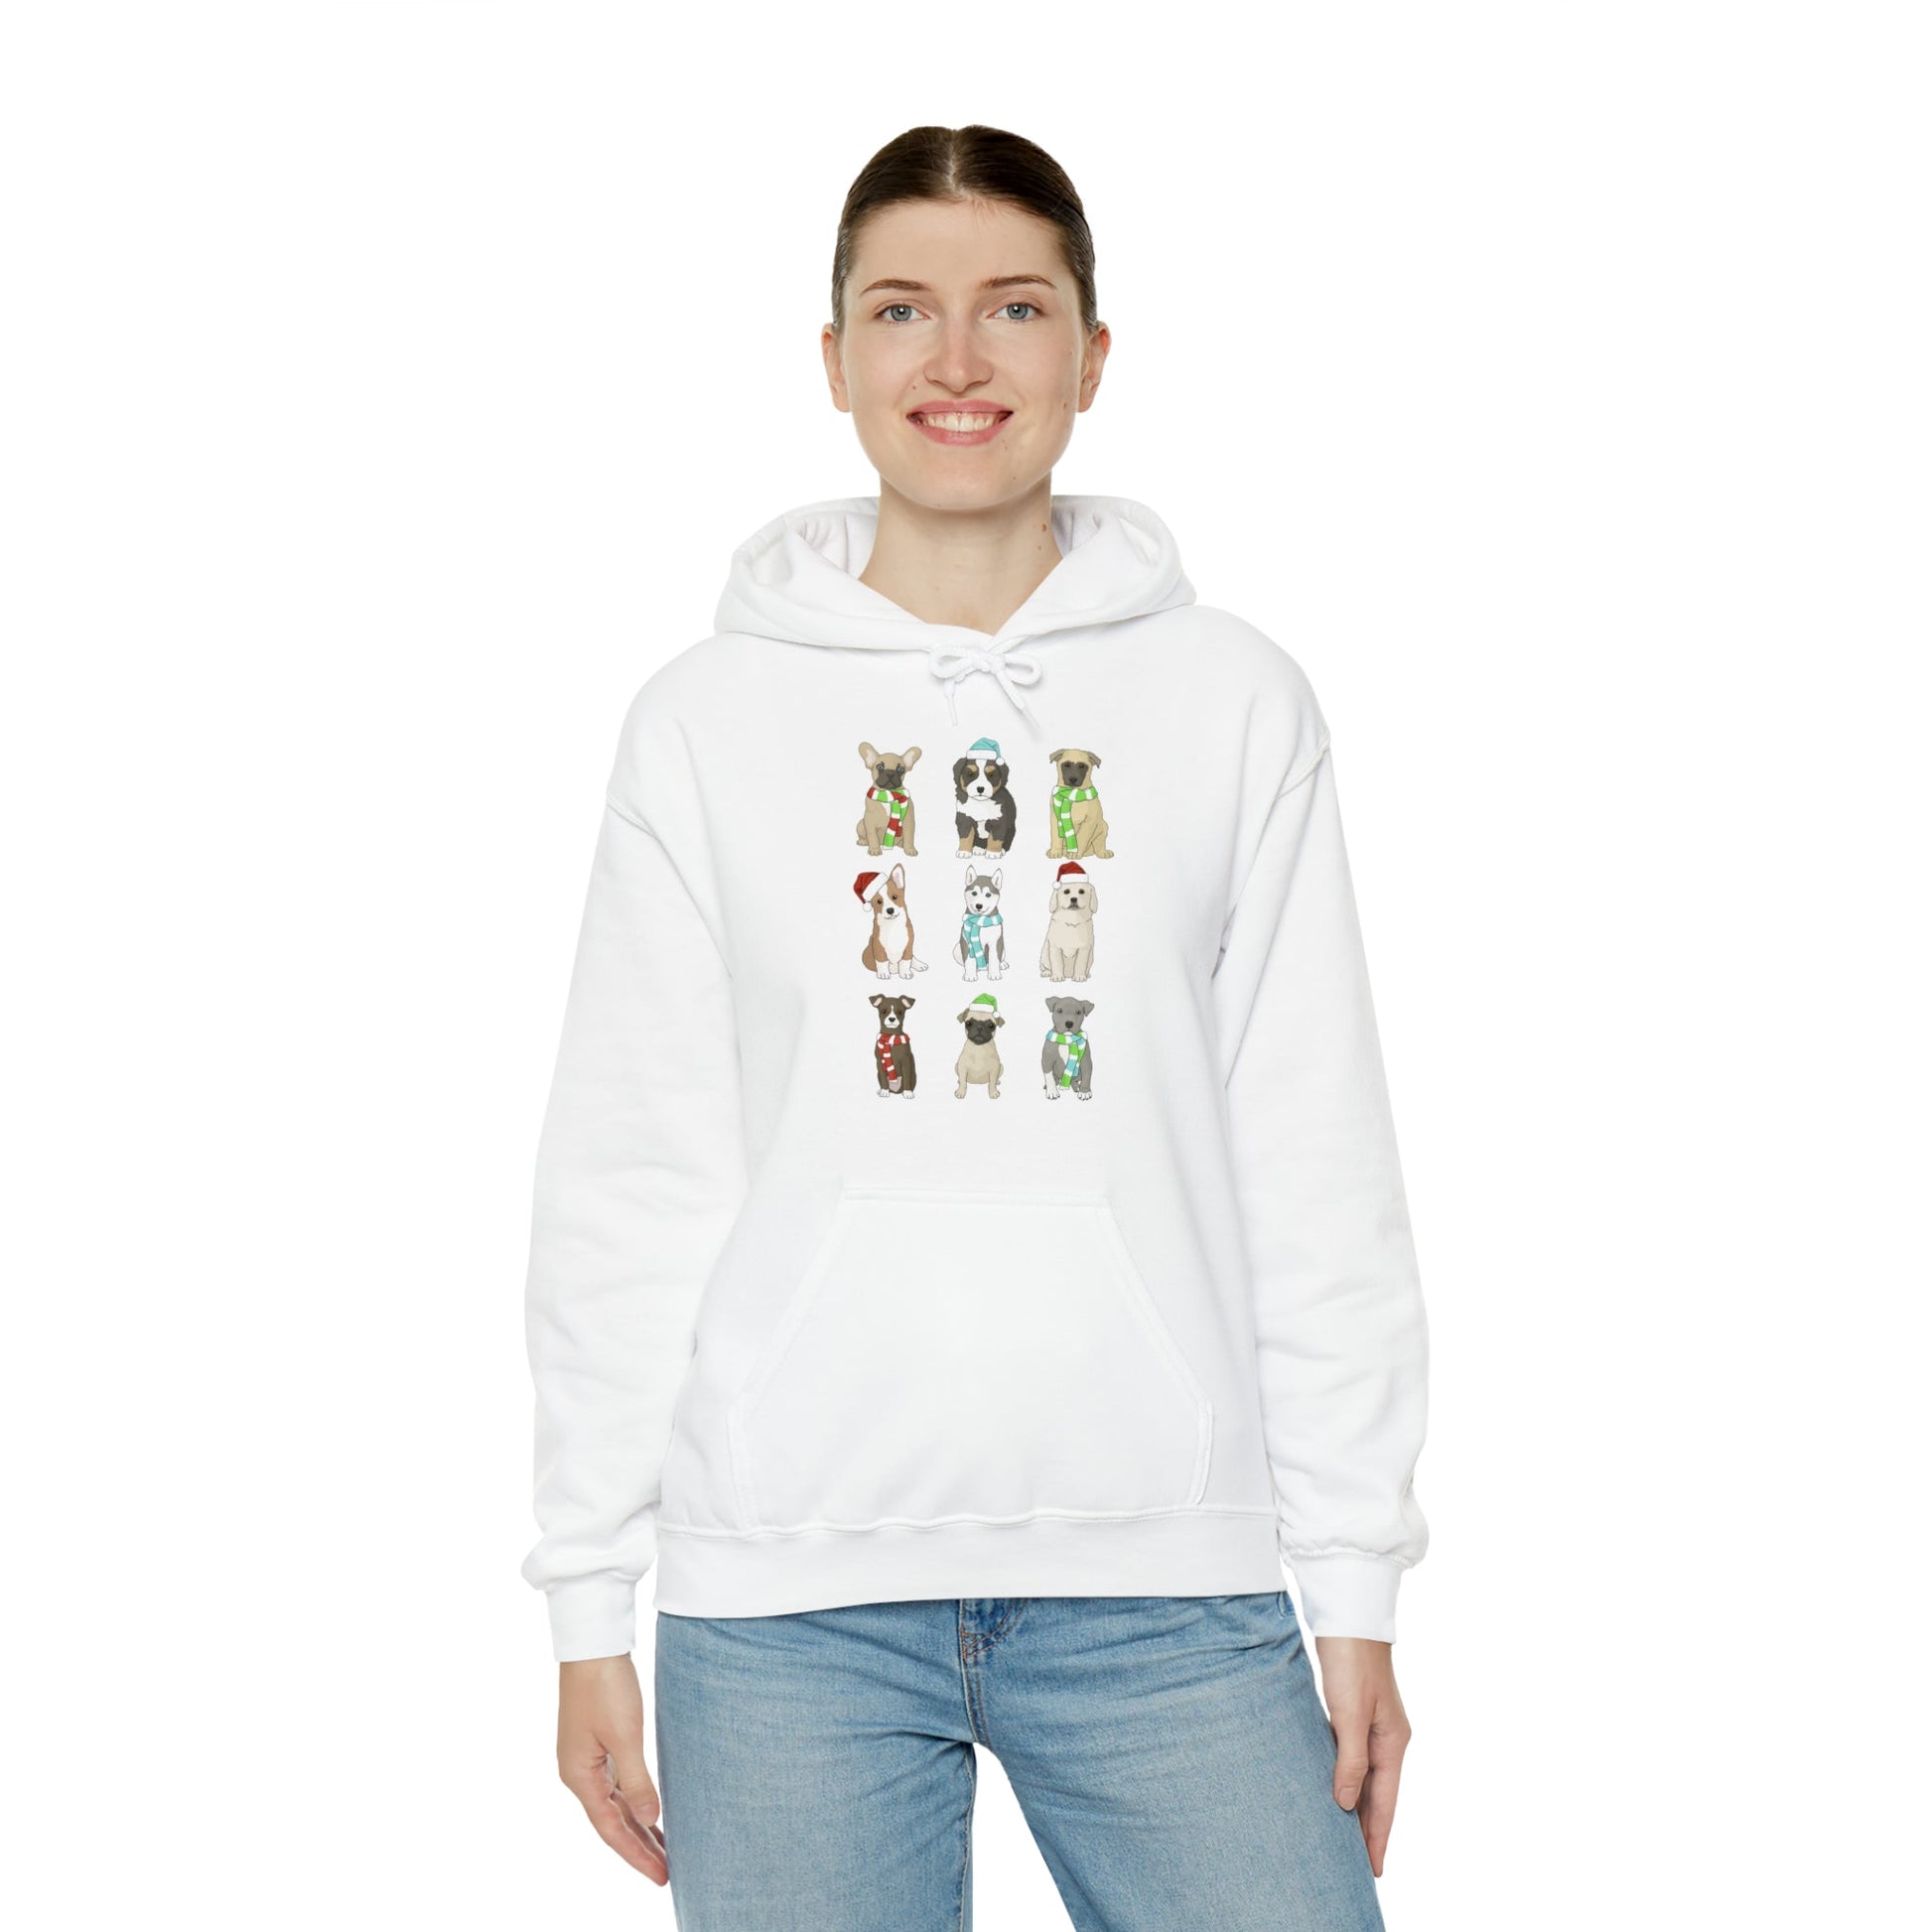 Holiday Puppies | Hooded Sweatshirt - Detezi Designs-12383967156657984872